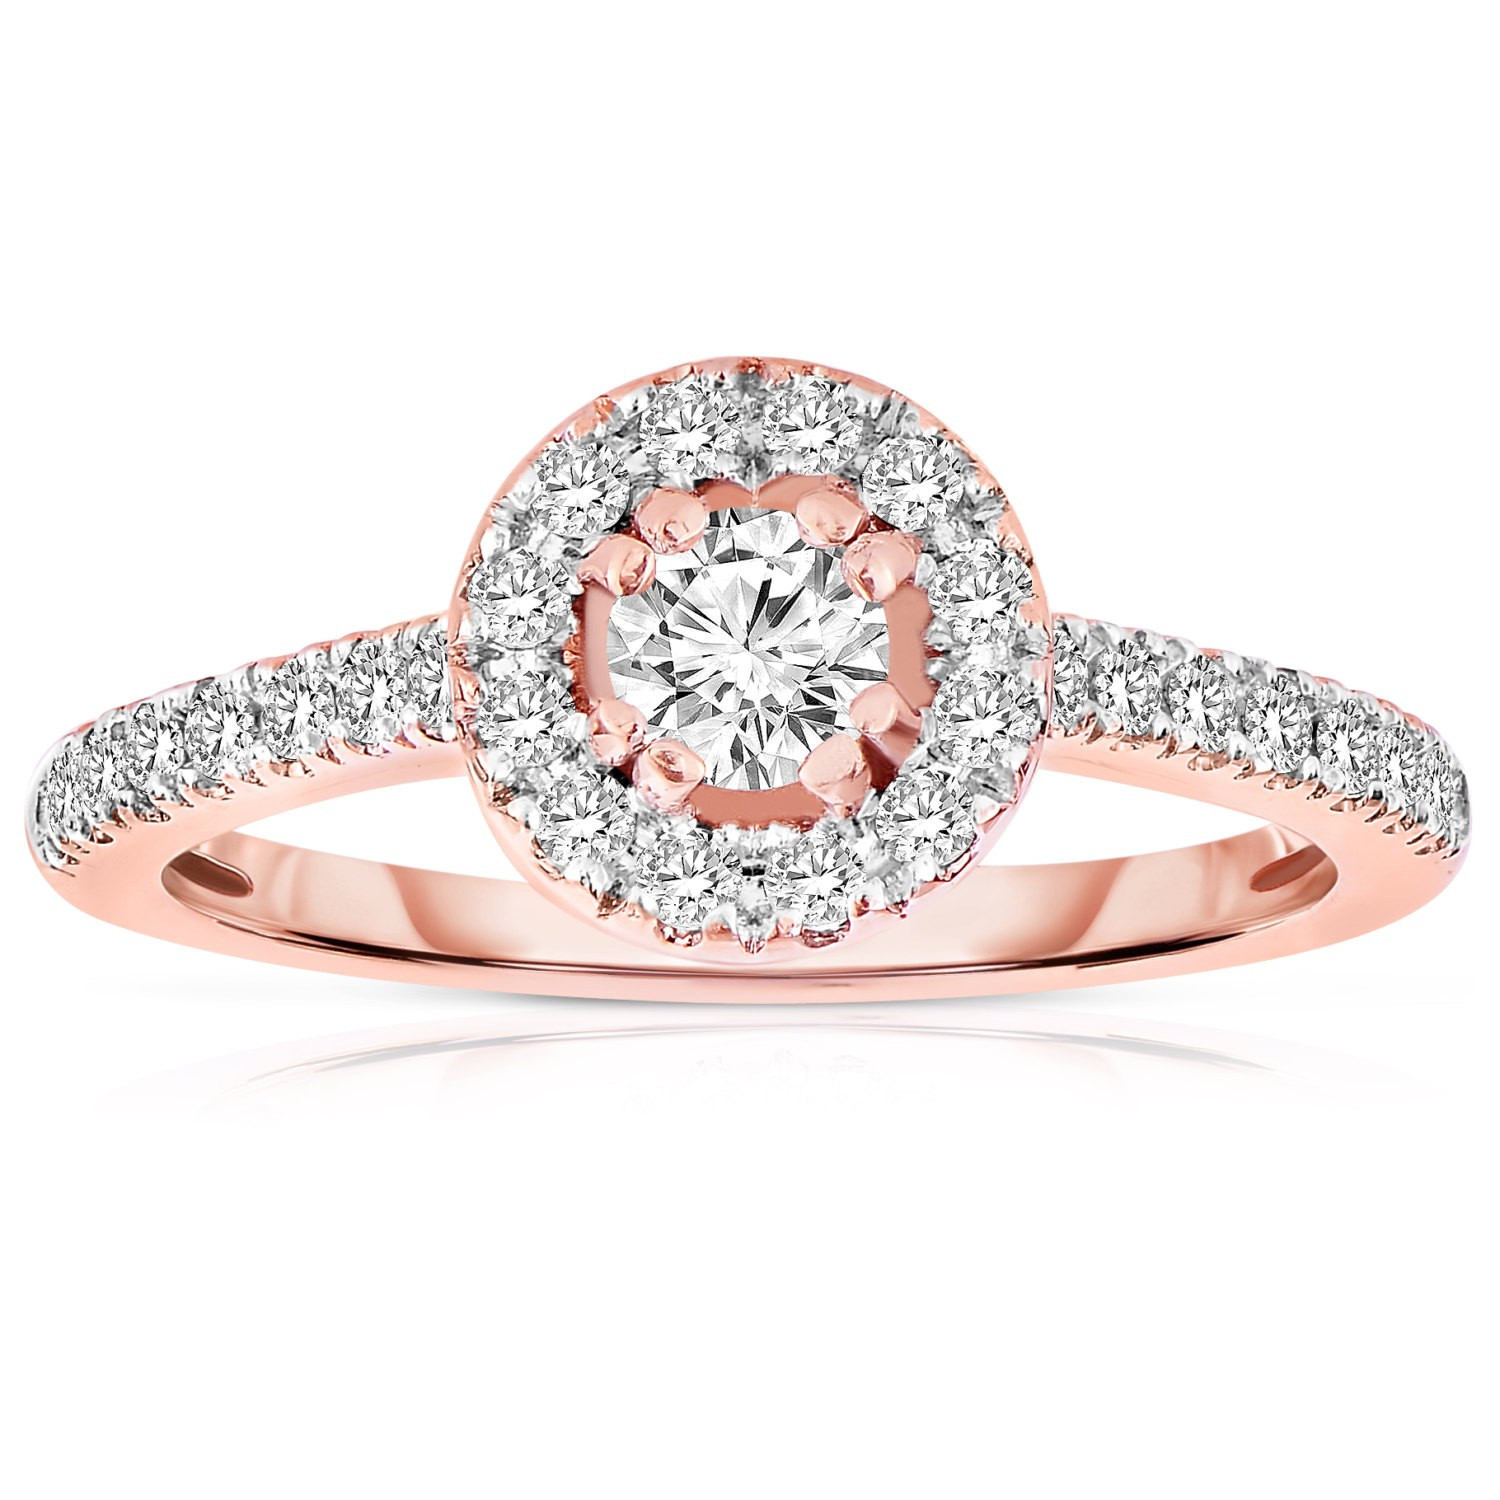 Rose Gold Diamond Engagement Ring
 Half Carat Round cut Halo Diamond Engagement Ring in Rose